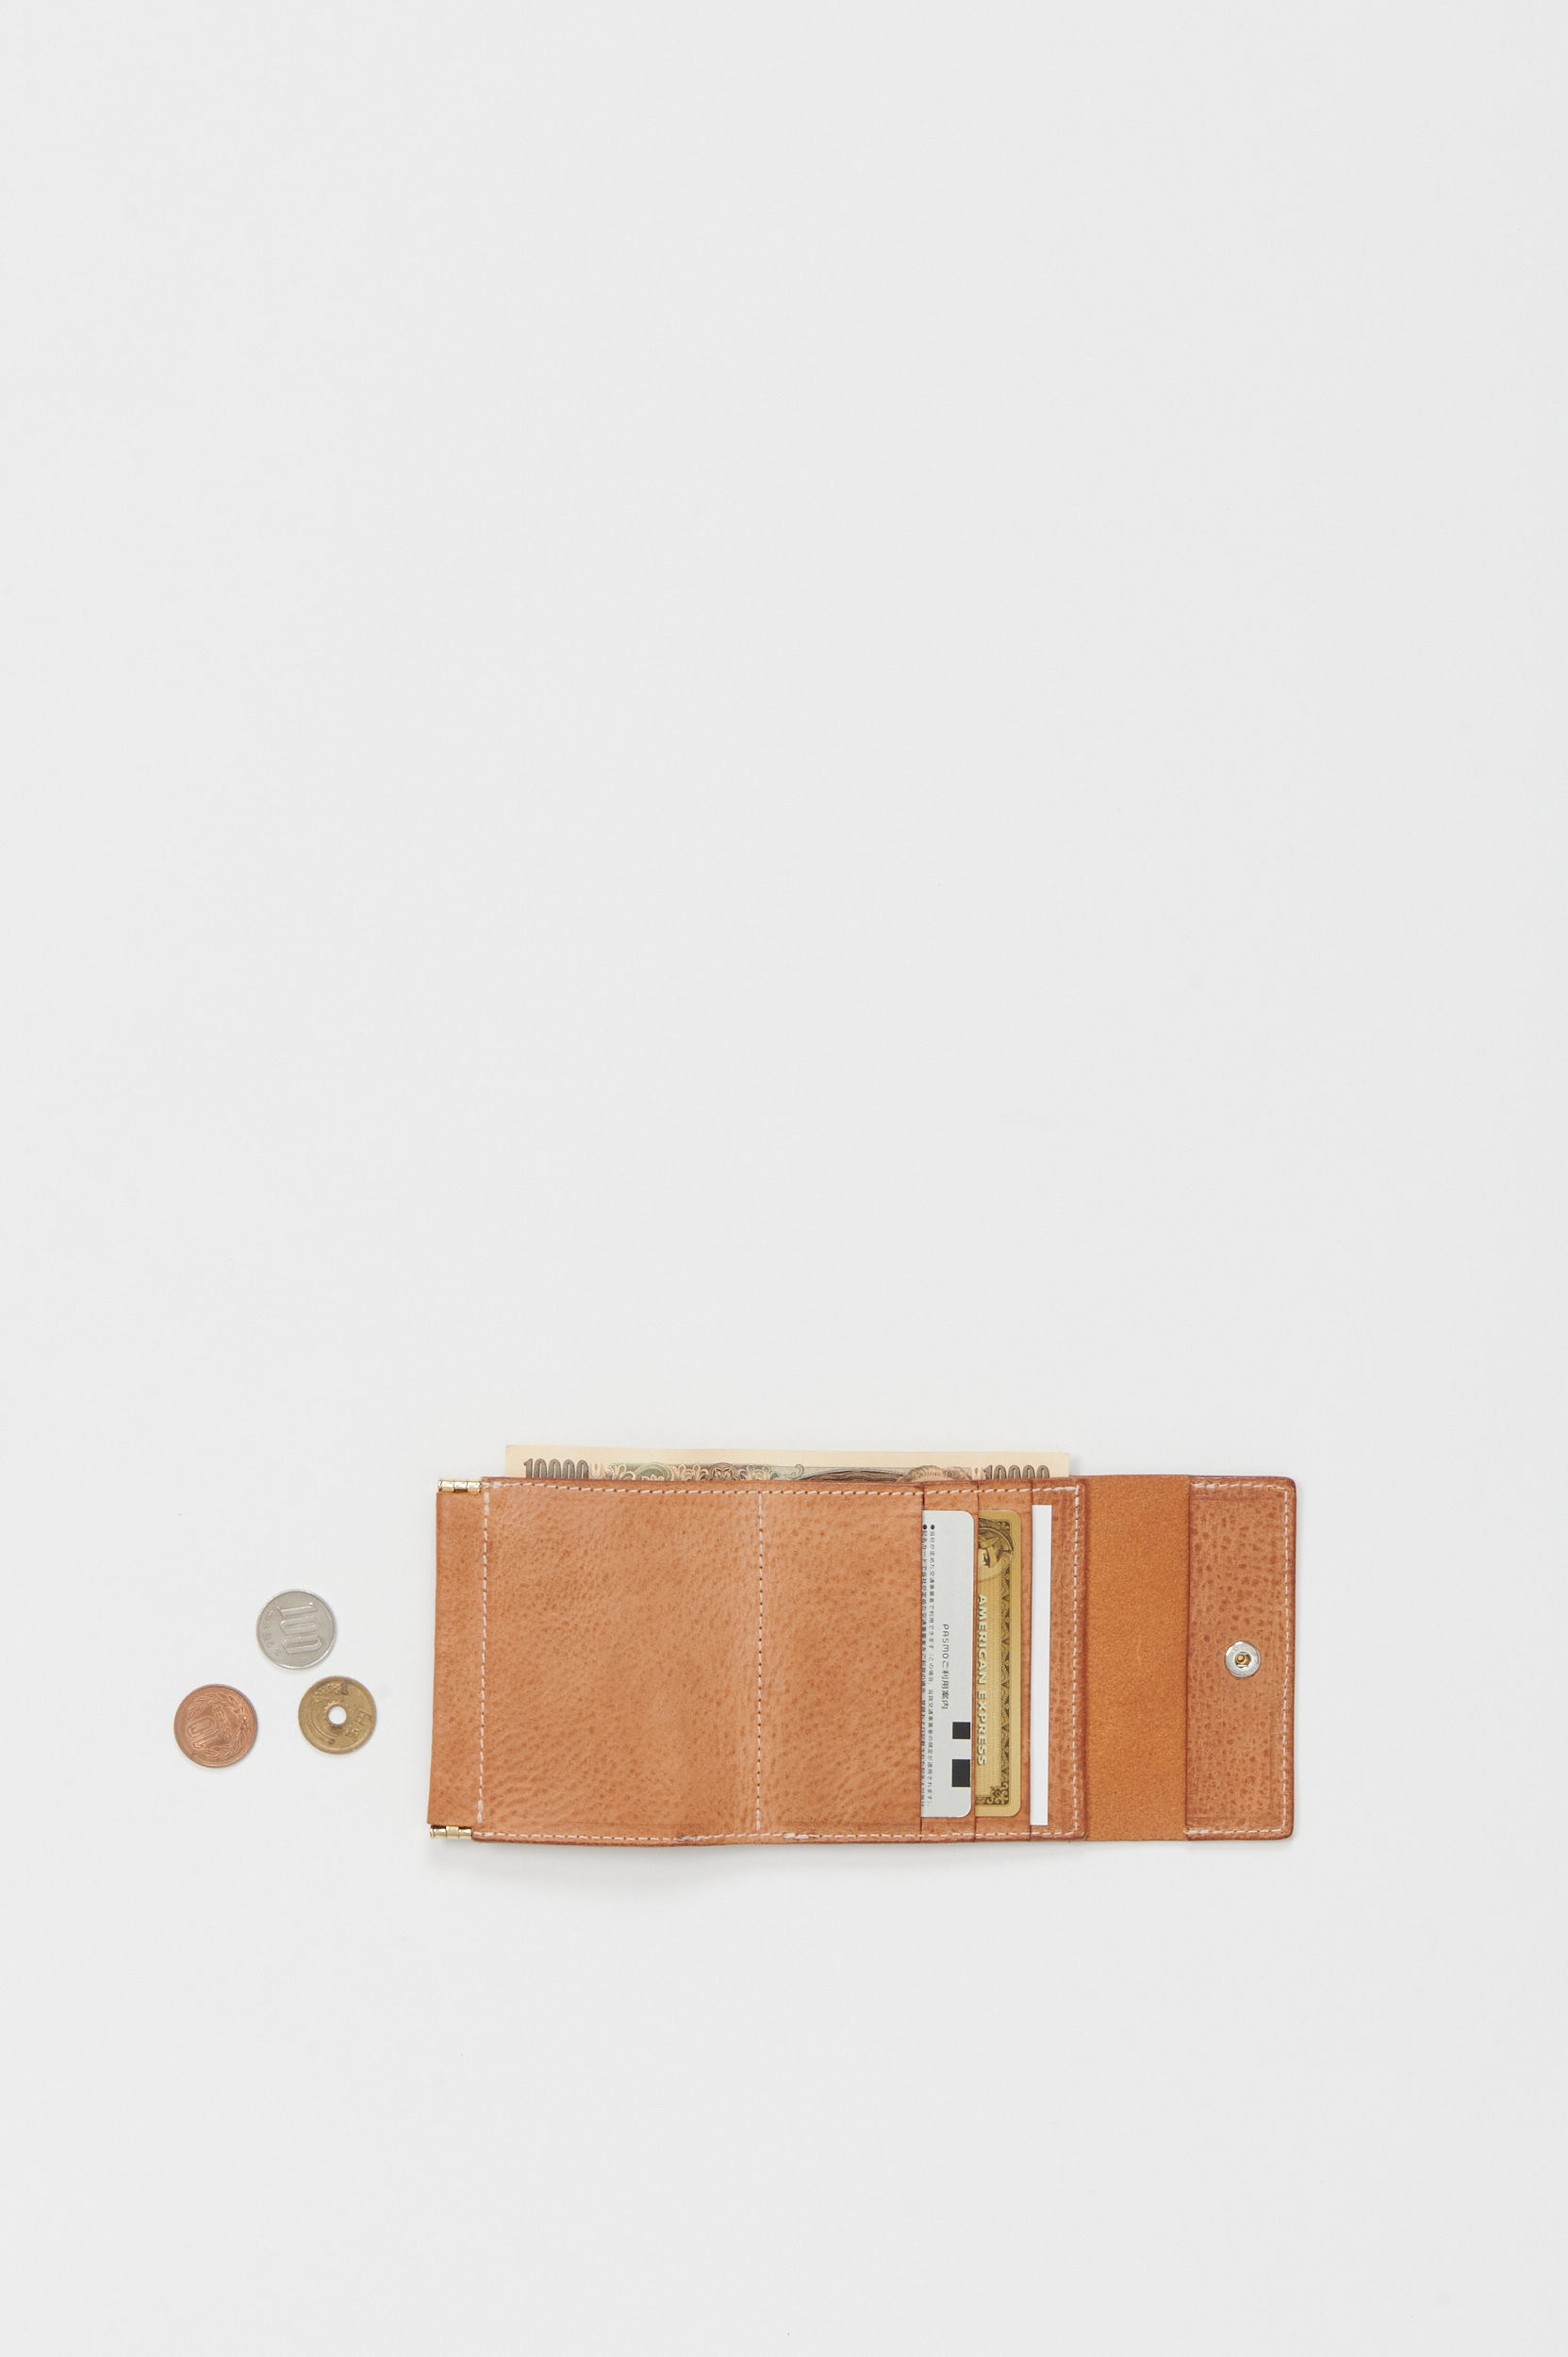 Hender Scheme エンダースキーマ 財布 正規取扱店 公式通販 送料無料 clasp wallet